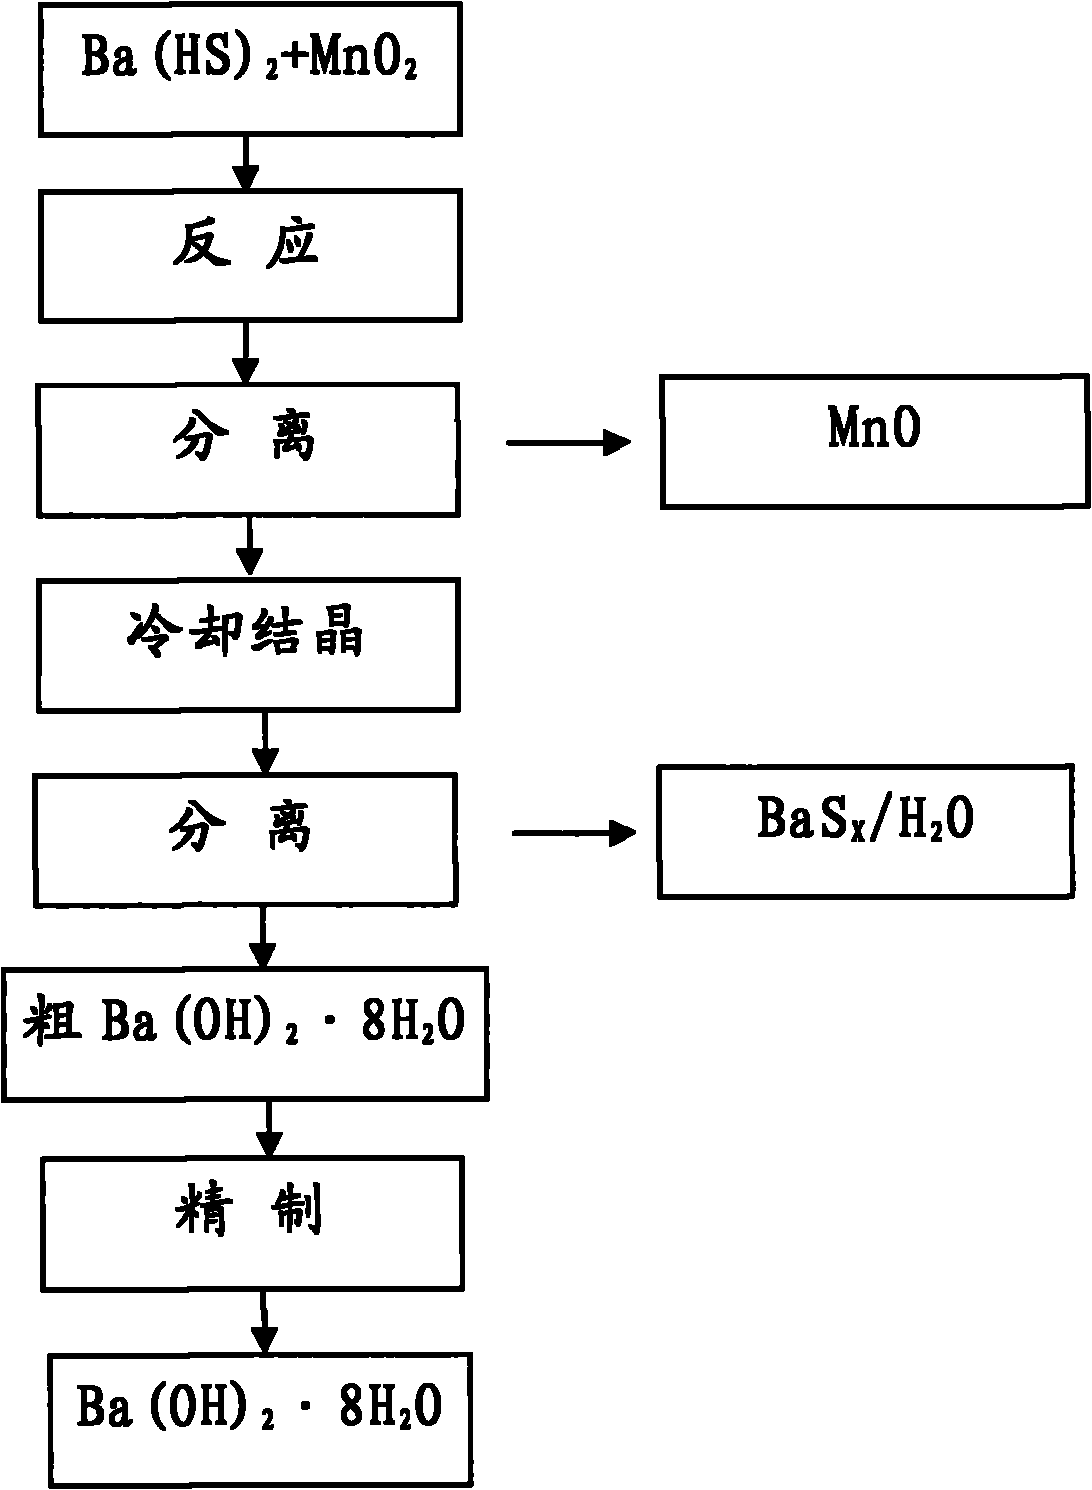 Method for preparing Ba(OH)2.8H2O